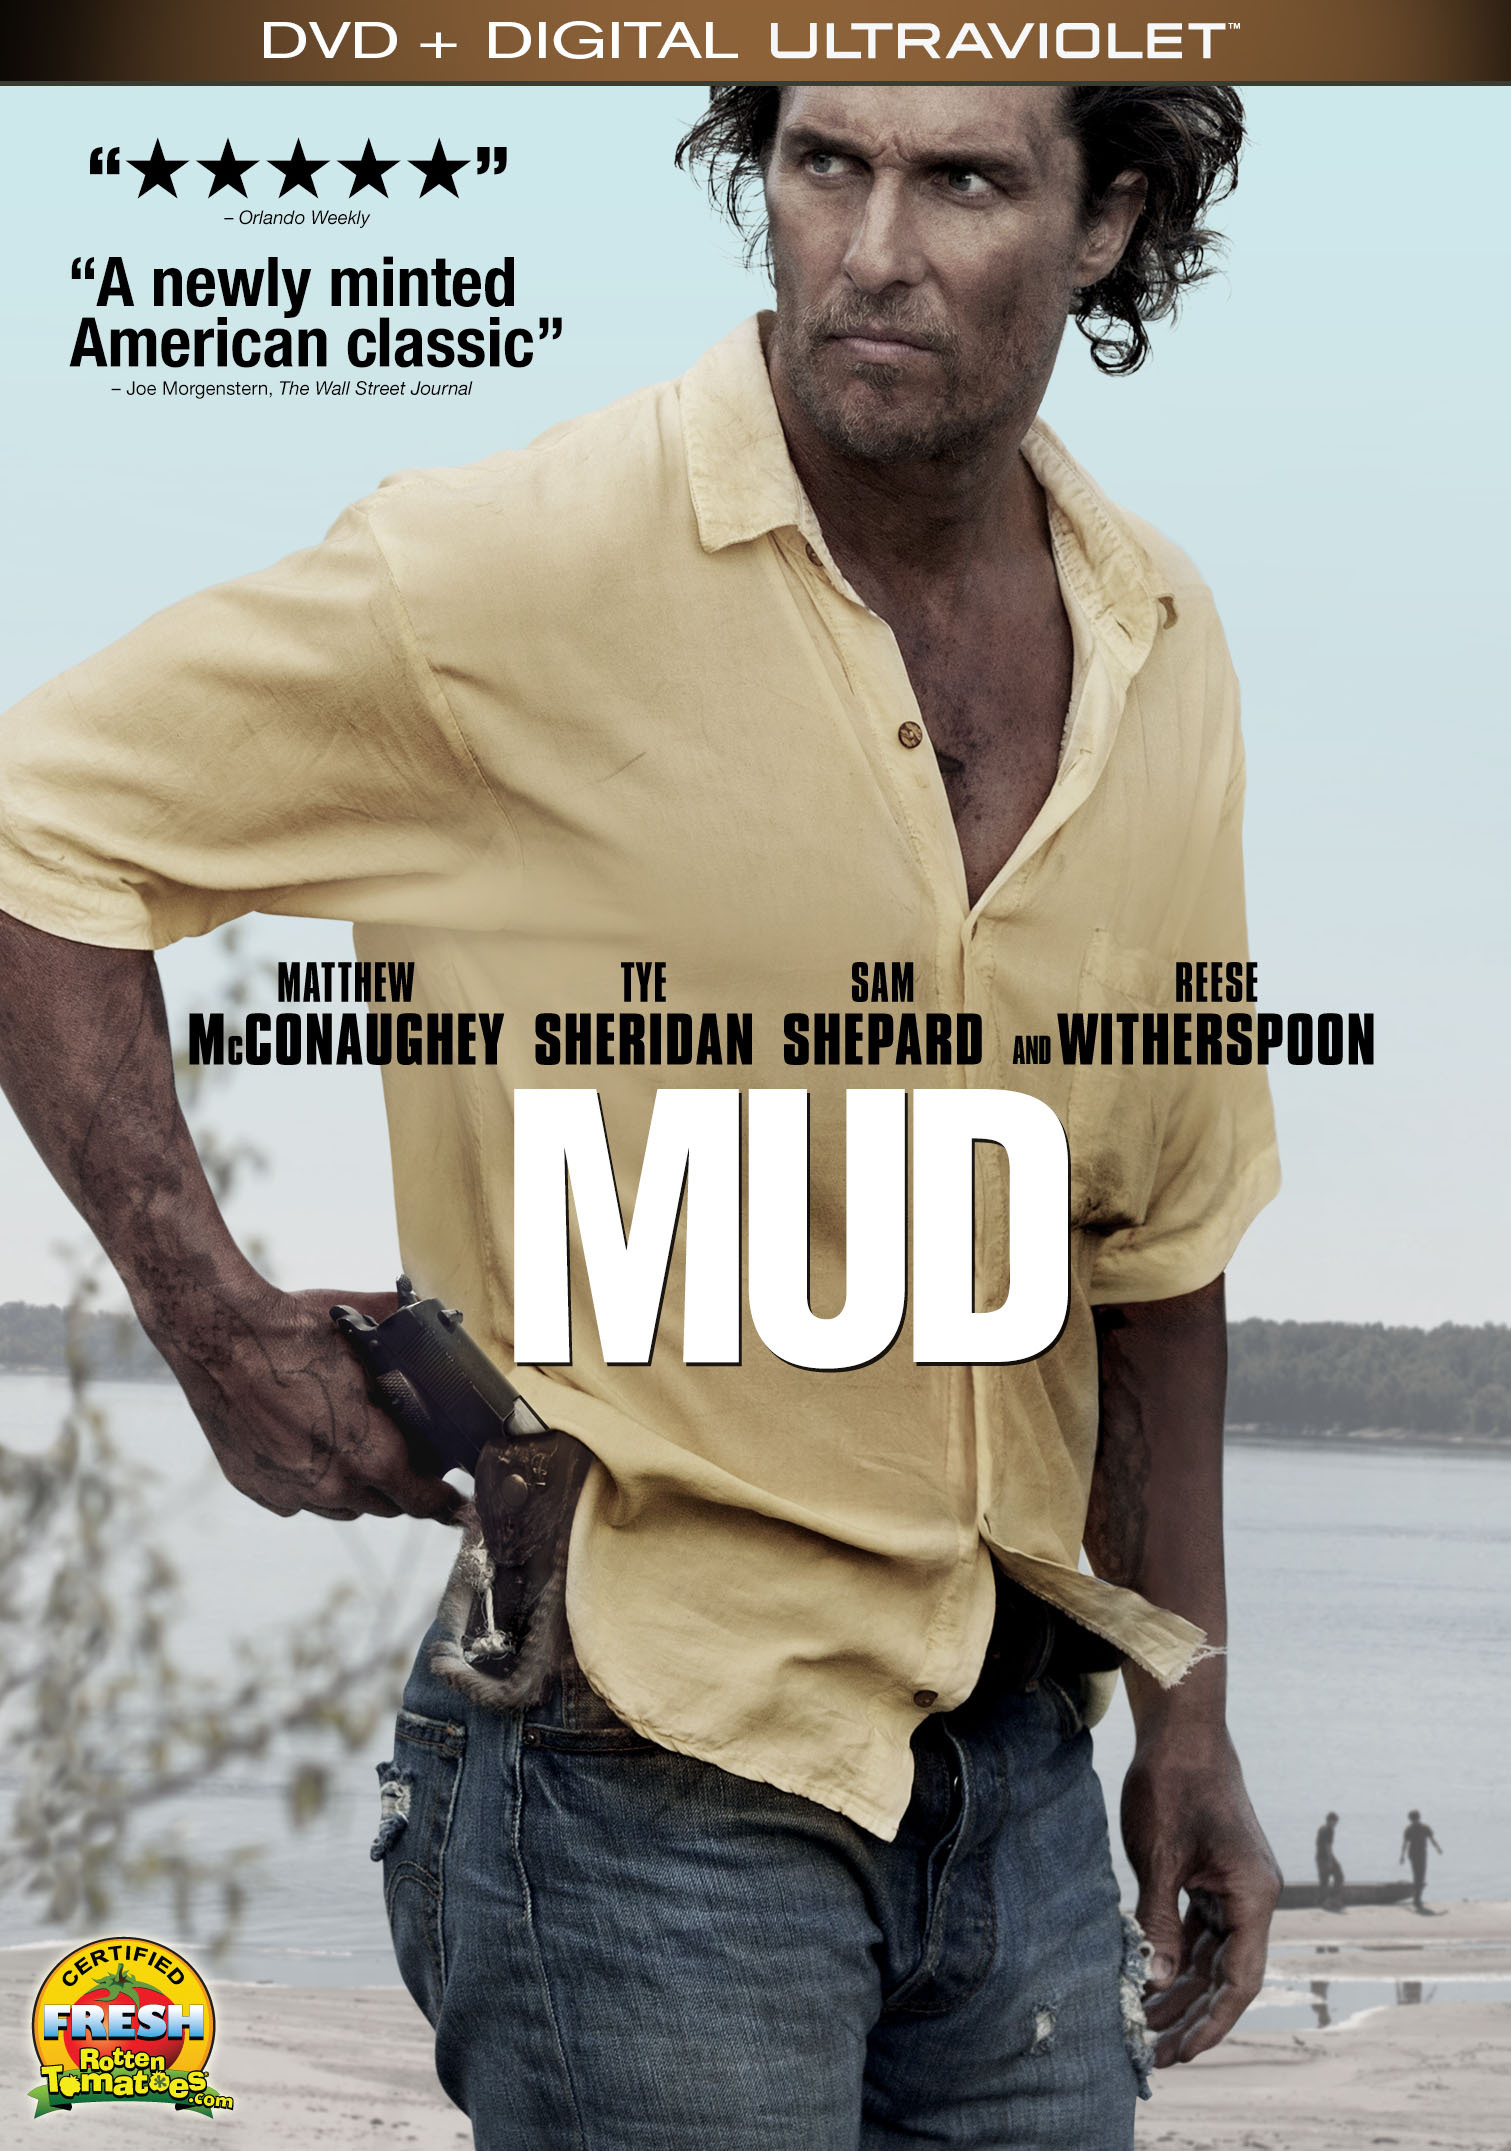 Mud (DVD + Digital + Ultraviolet) - DVD [ 2012 ]  - Drama Movies On DVD - Movies On GRUV